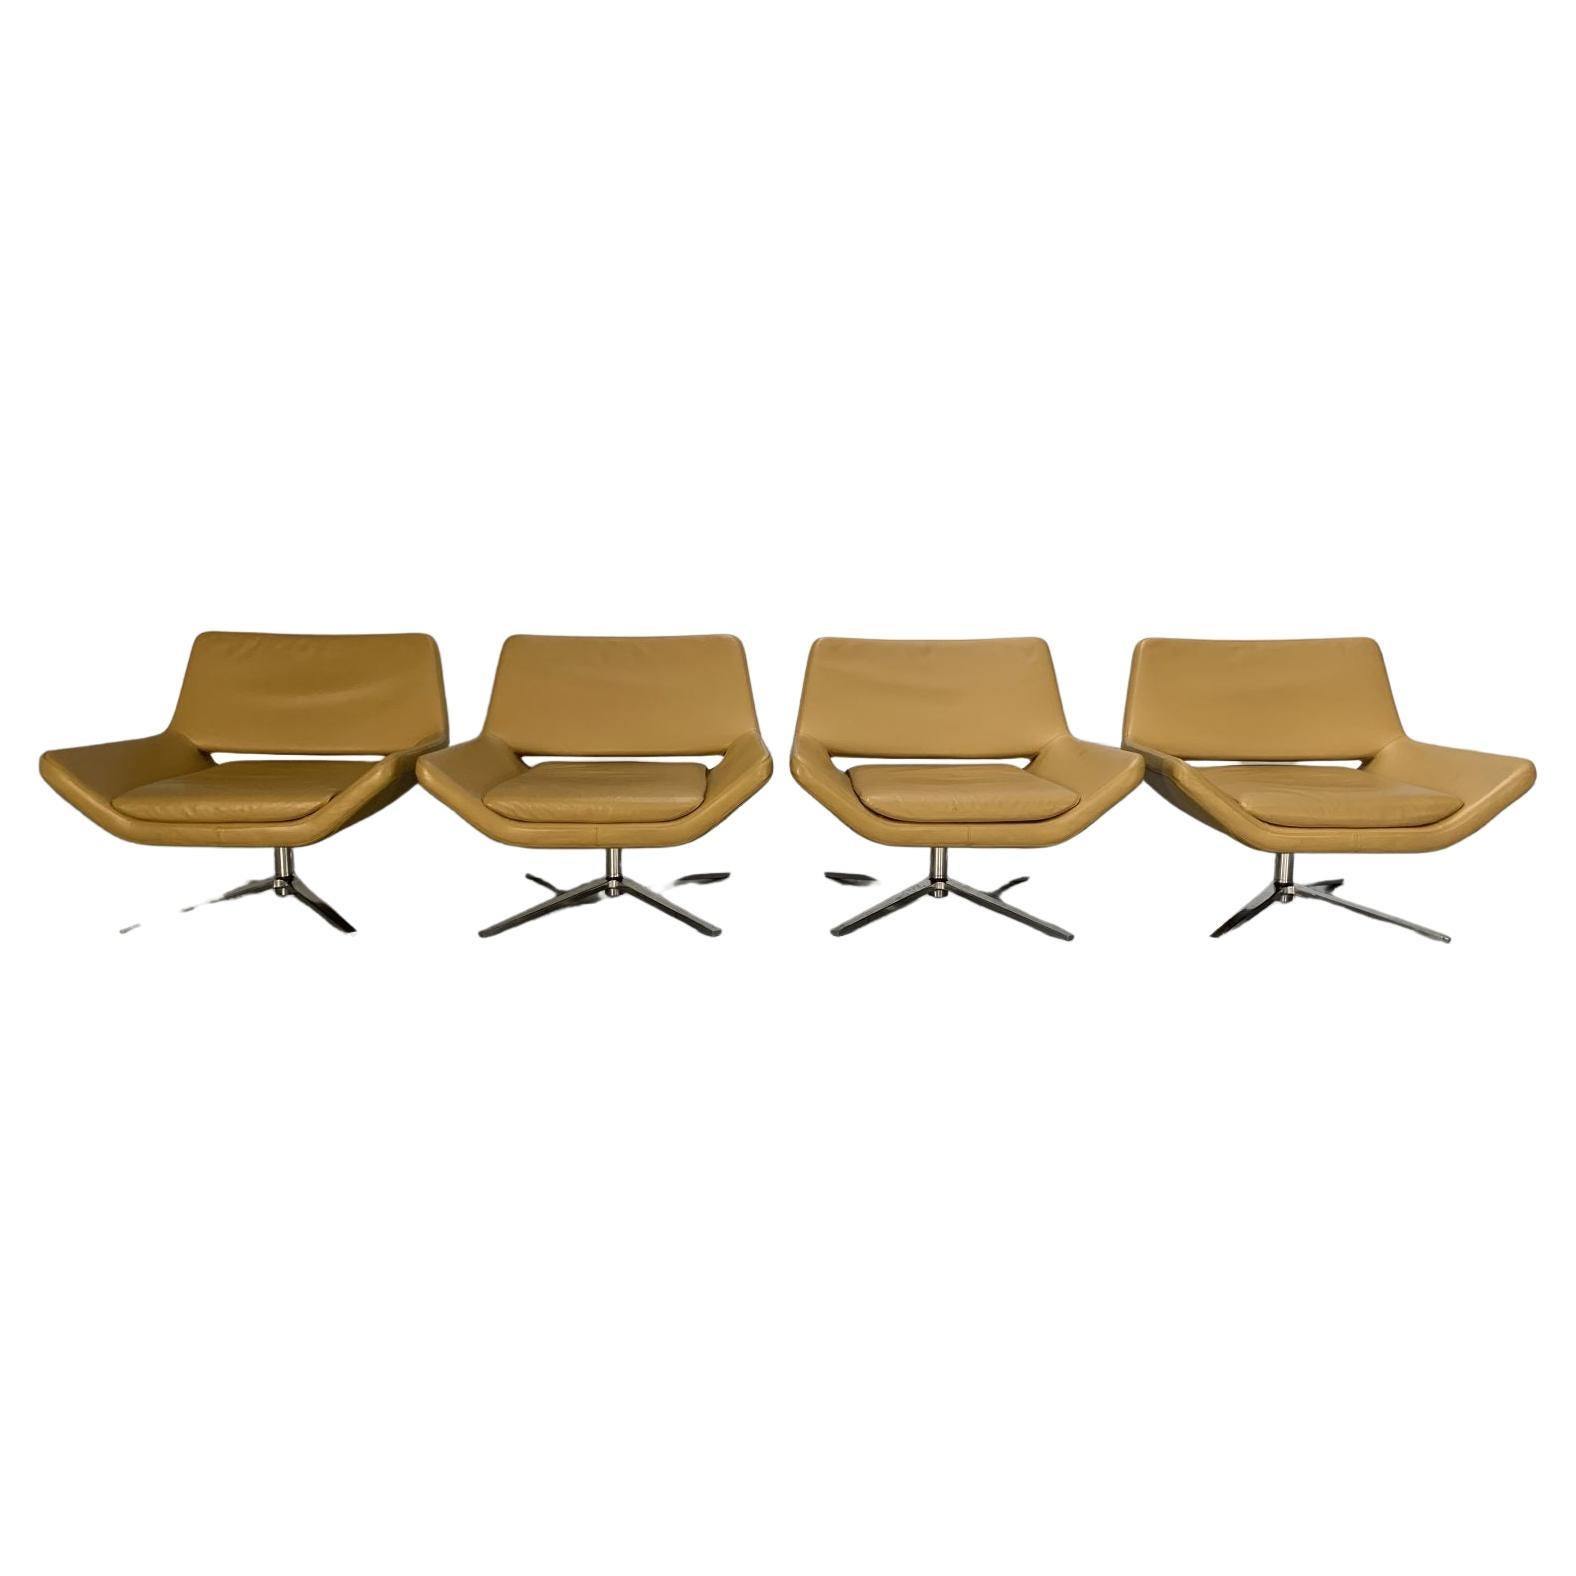 Suite de 4 fauteuils B&B Italia Metropolitan ME84 en cuir Gamma brun clair